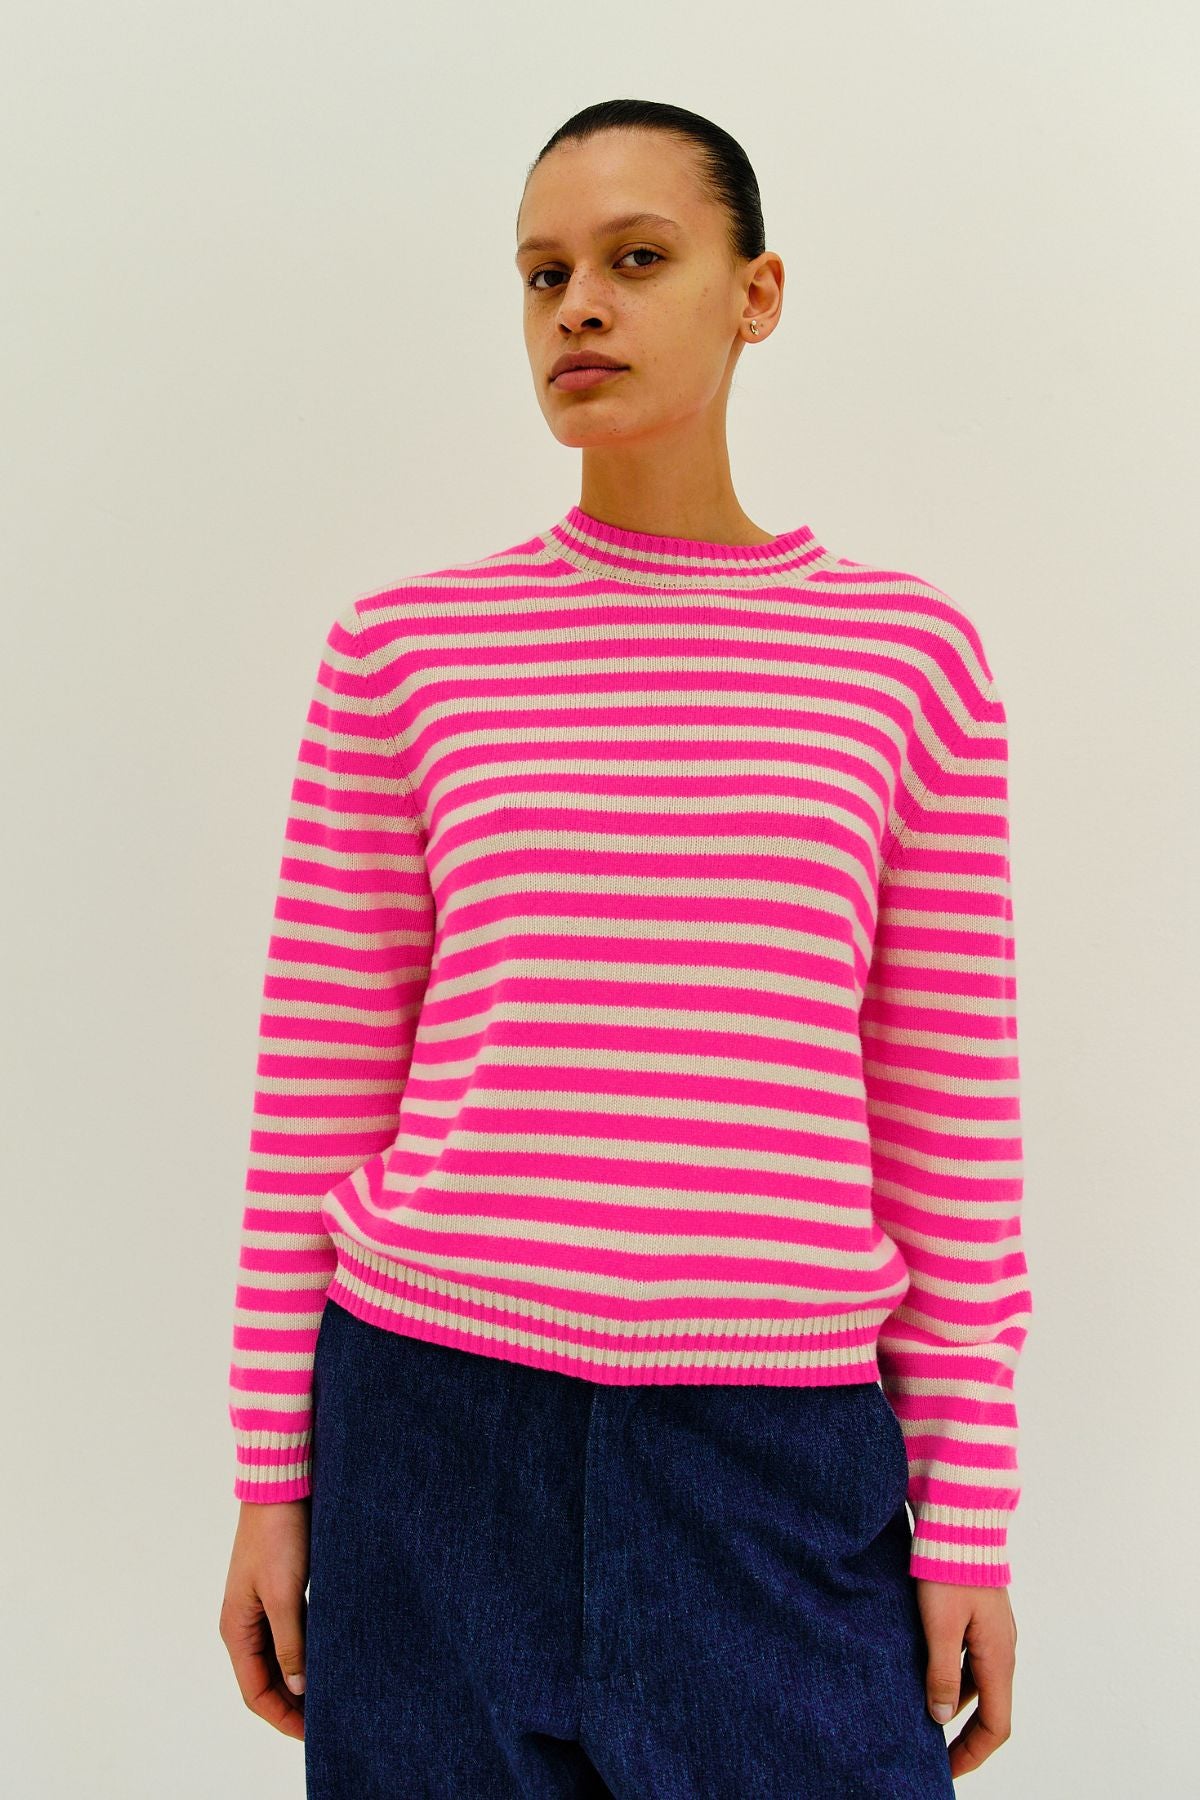 Rika Studios Benjamin Knit Jumper - Creamy/ Neon Pink